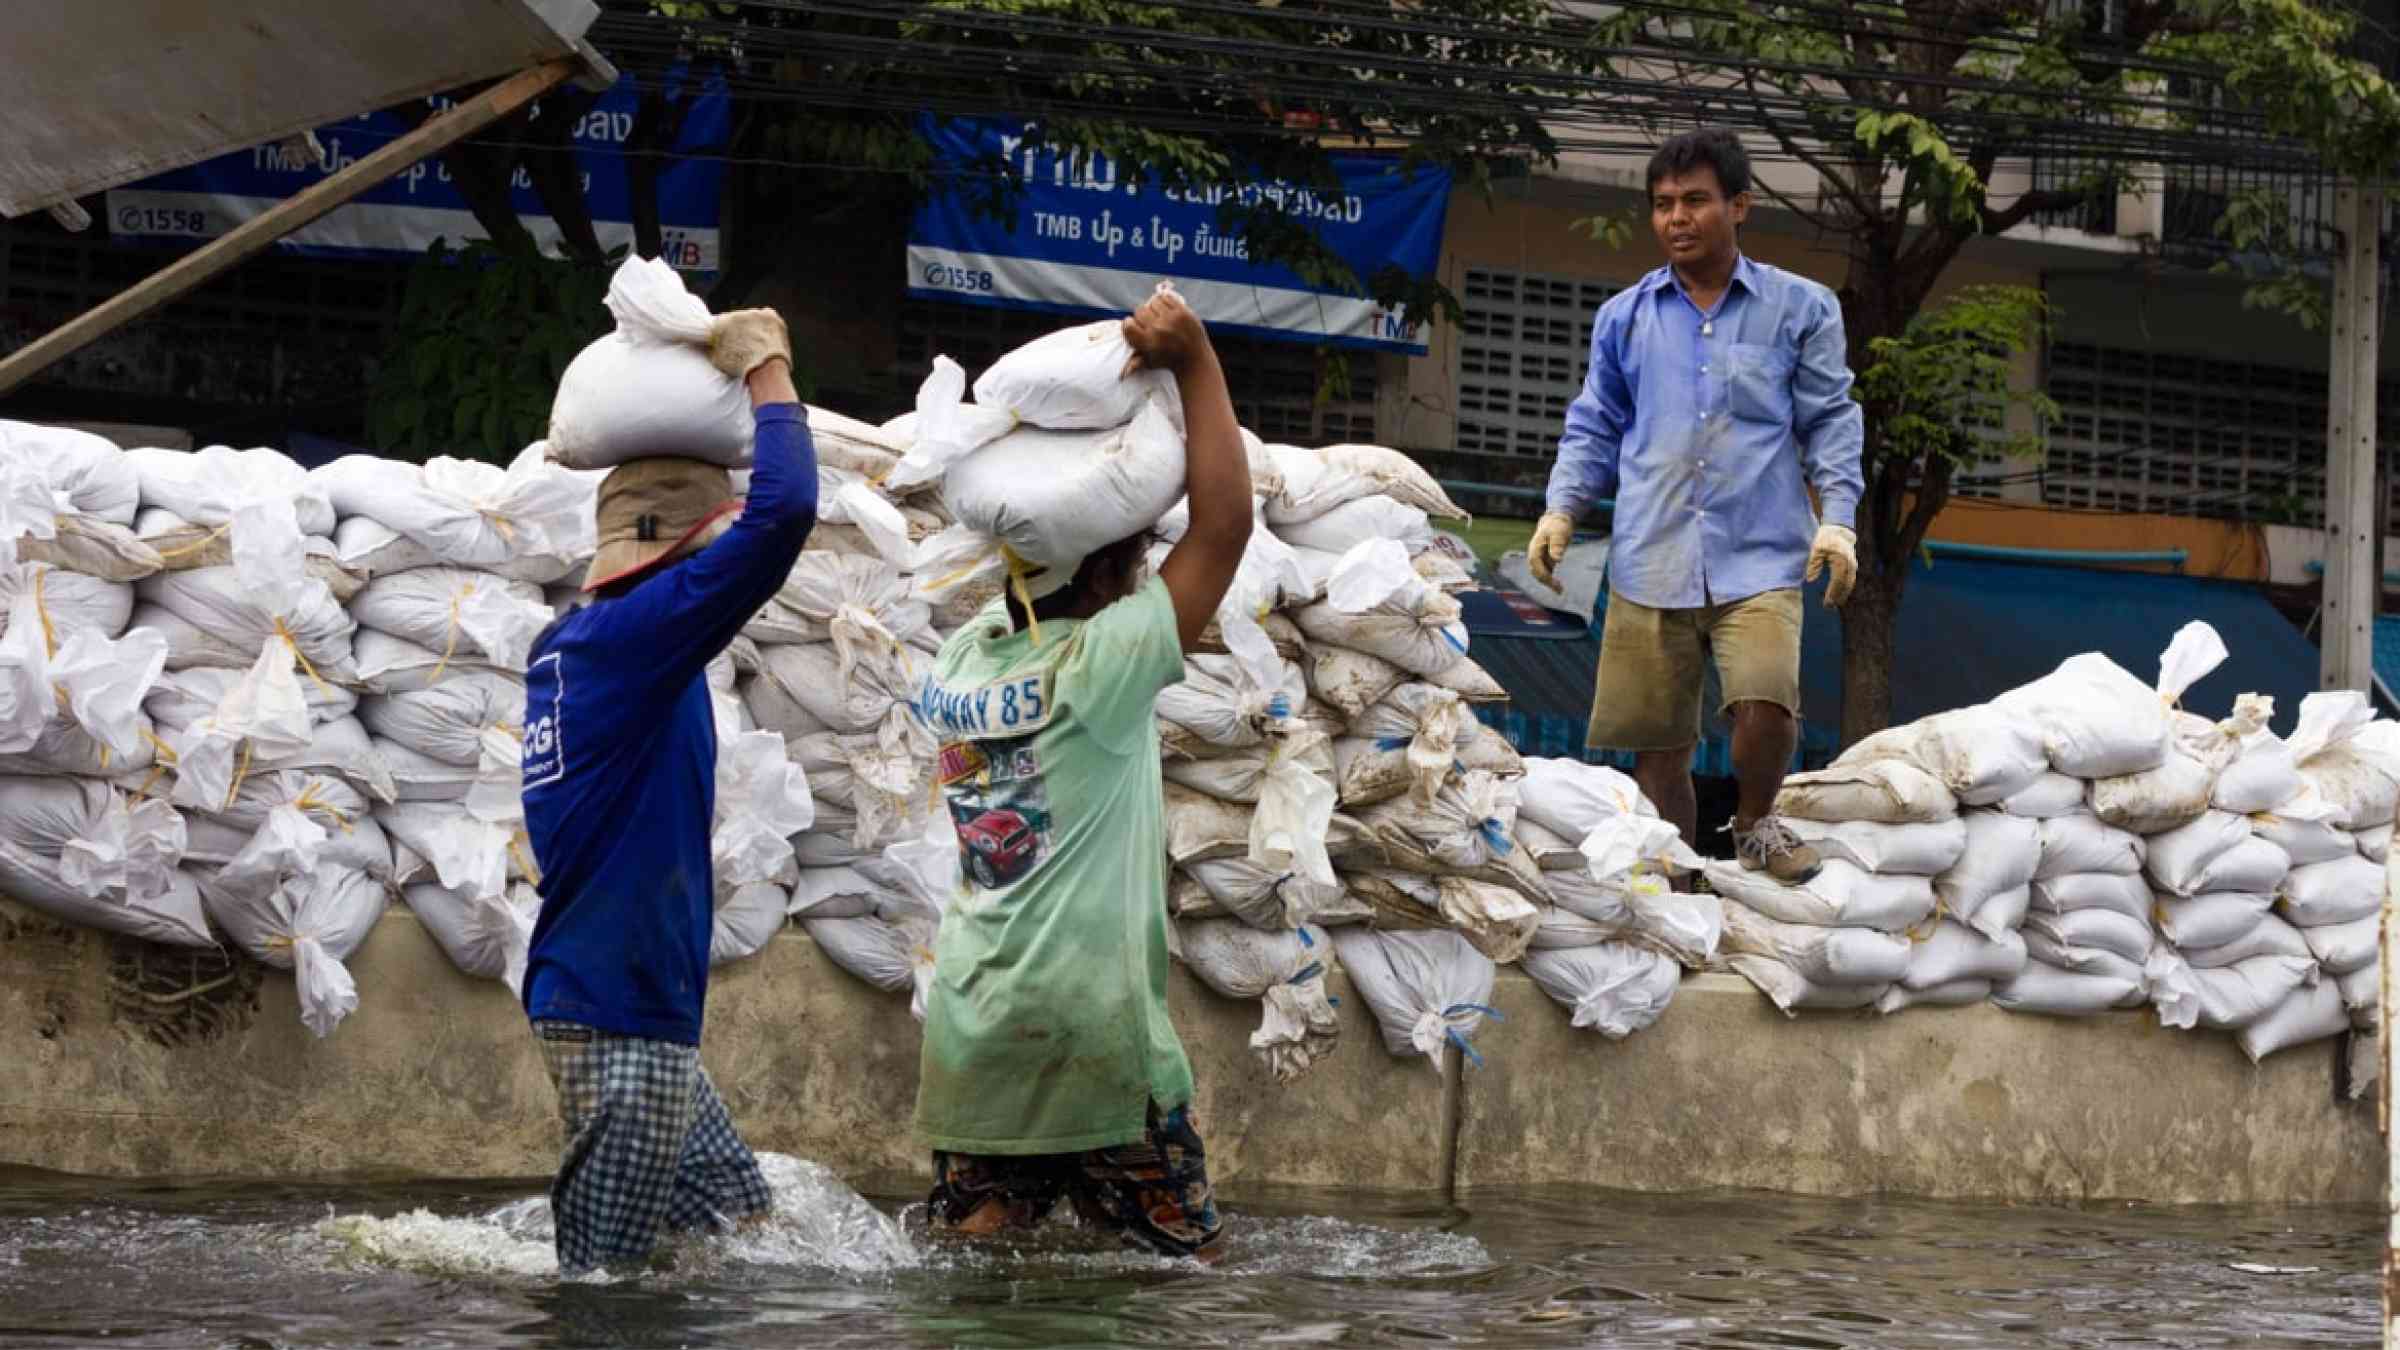 People bringing sandbags to prevent flooding in Bangkok, Thailand (2011)